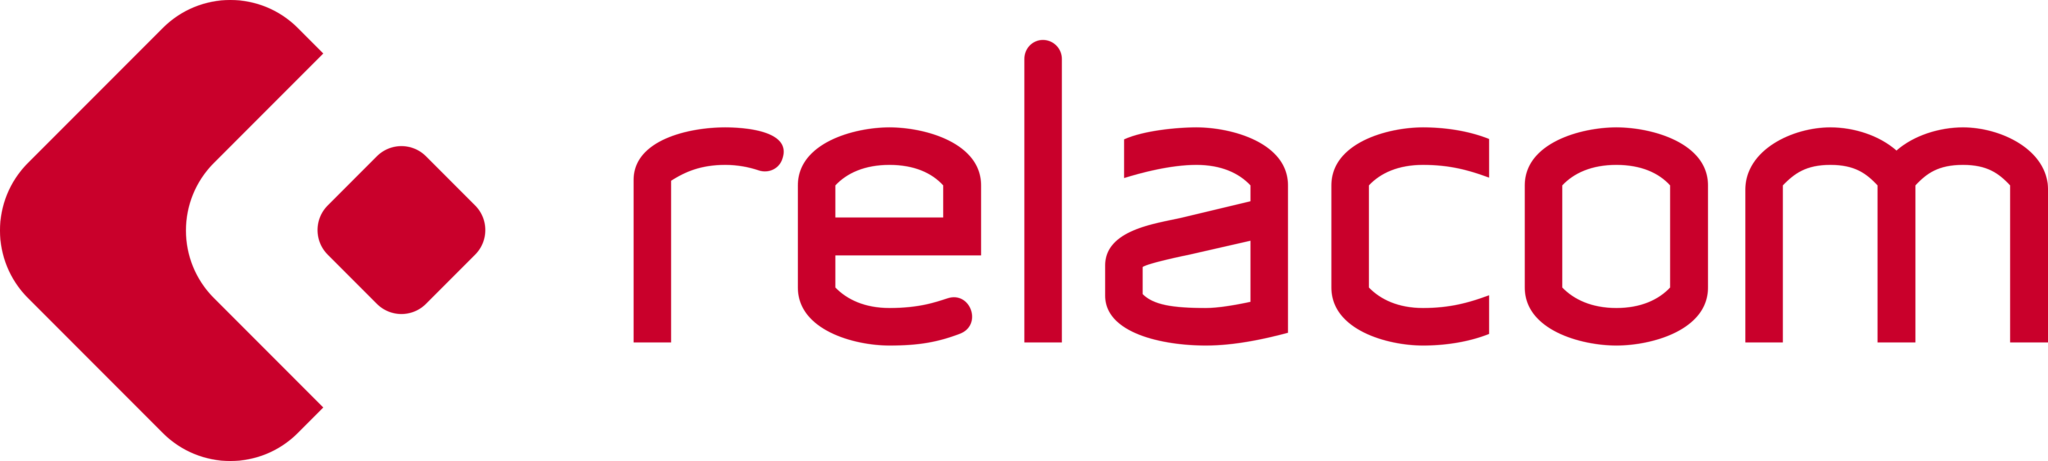 1024 com. Соротелеком corotelecom логотип. Saima Telecom logo. DECT logo. Millionere logotype.